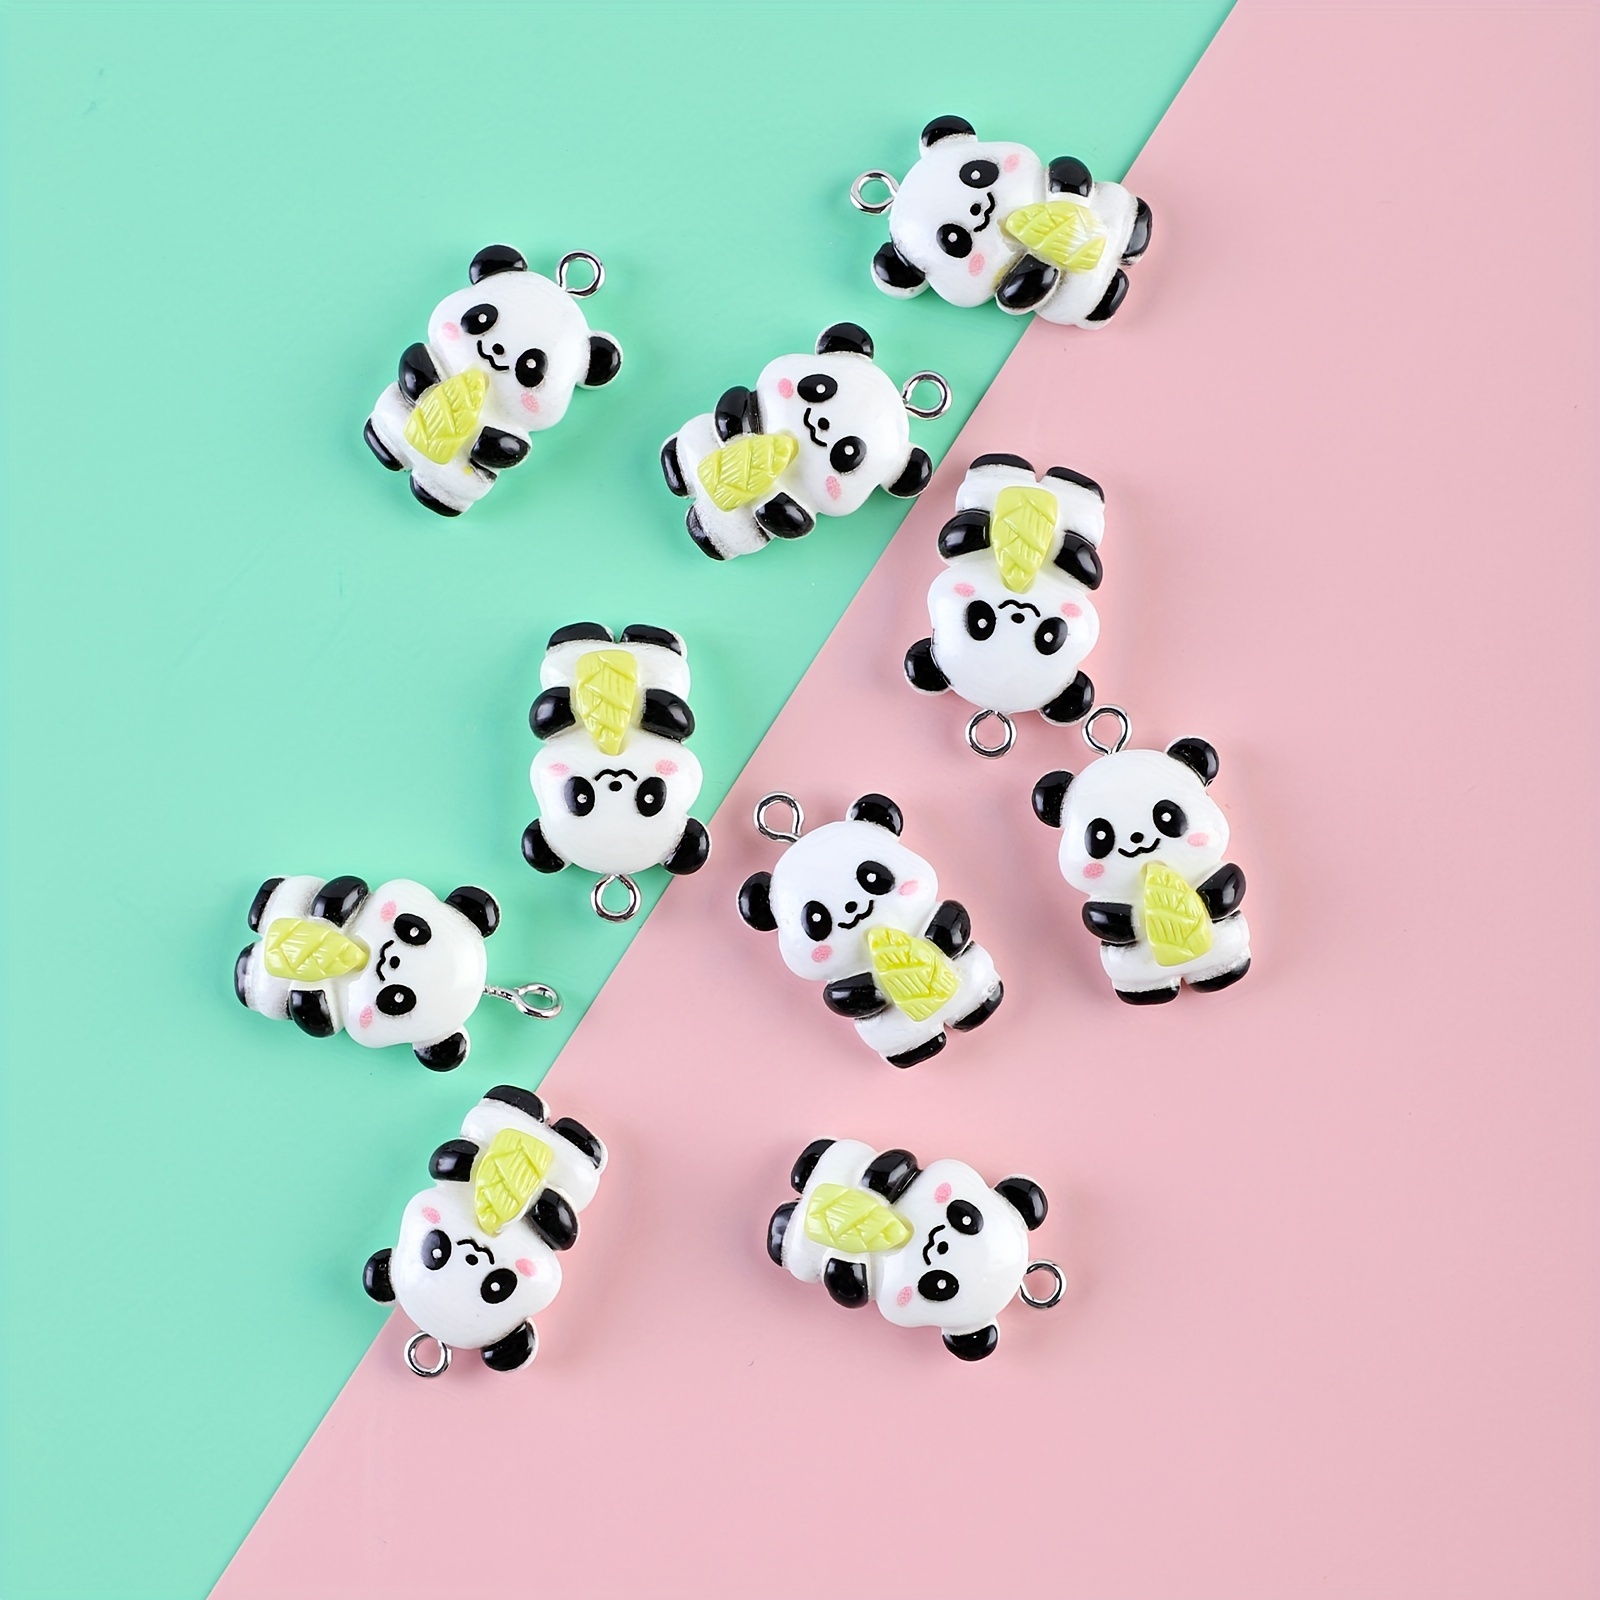 

10pc Cartoon Bright Panda Holding Bamboo Asparagus Pendant Cute Animal Panda Resin Charms For Diy Jewelry Hanging Ornament Earrings Pendant Resin Accessories